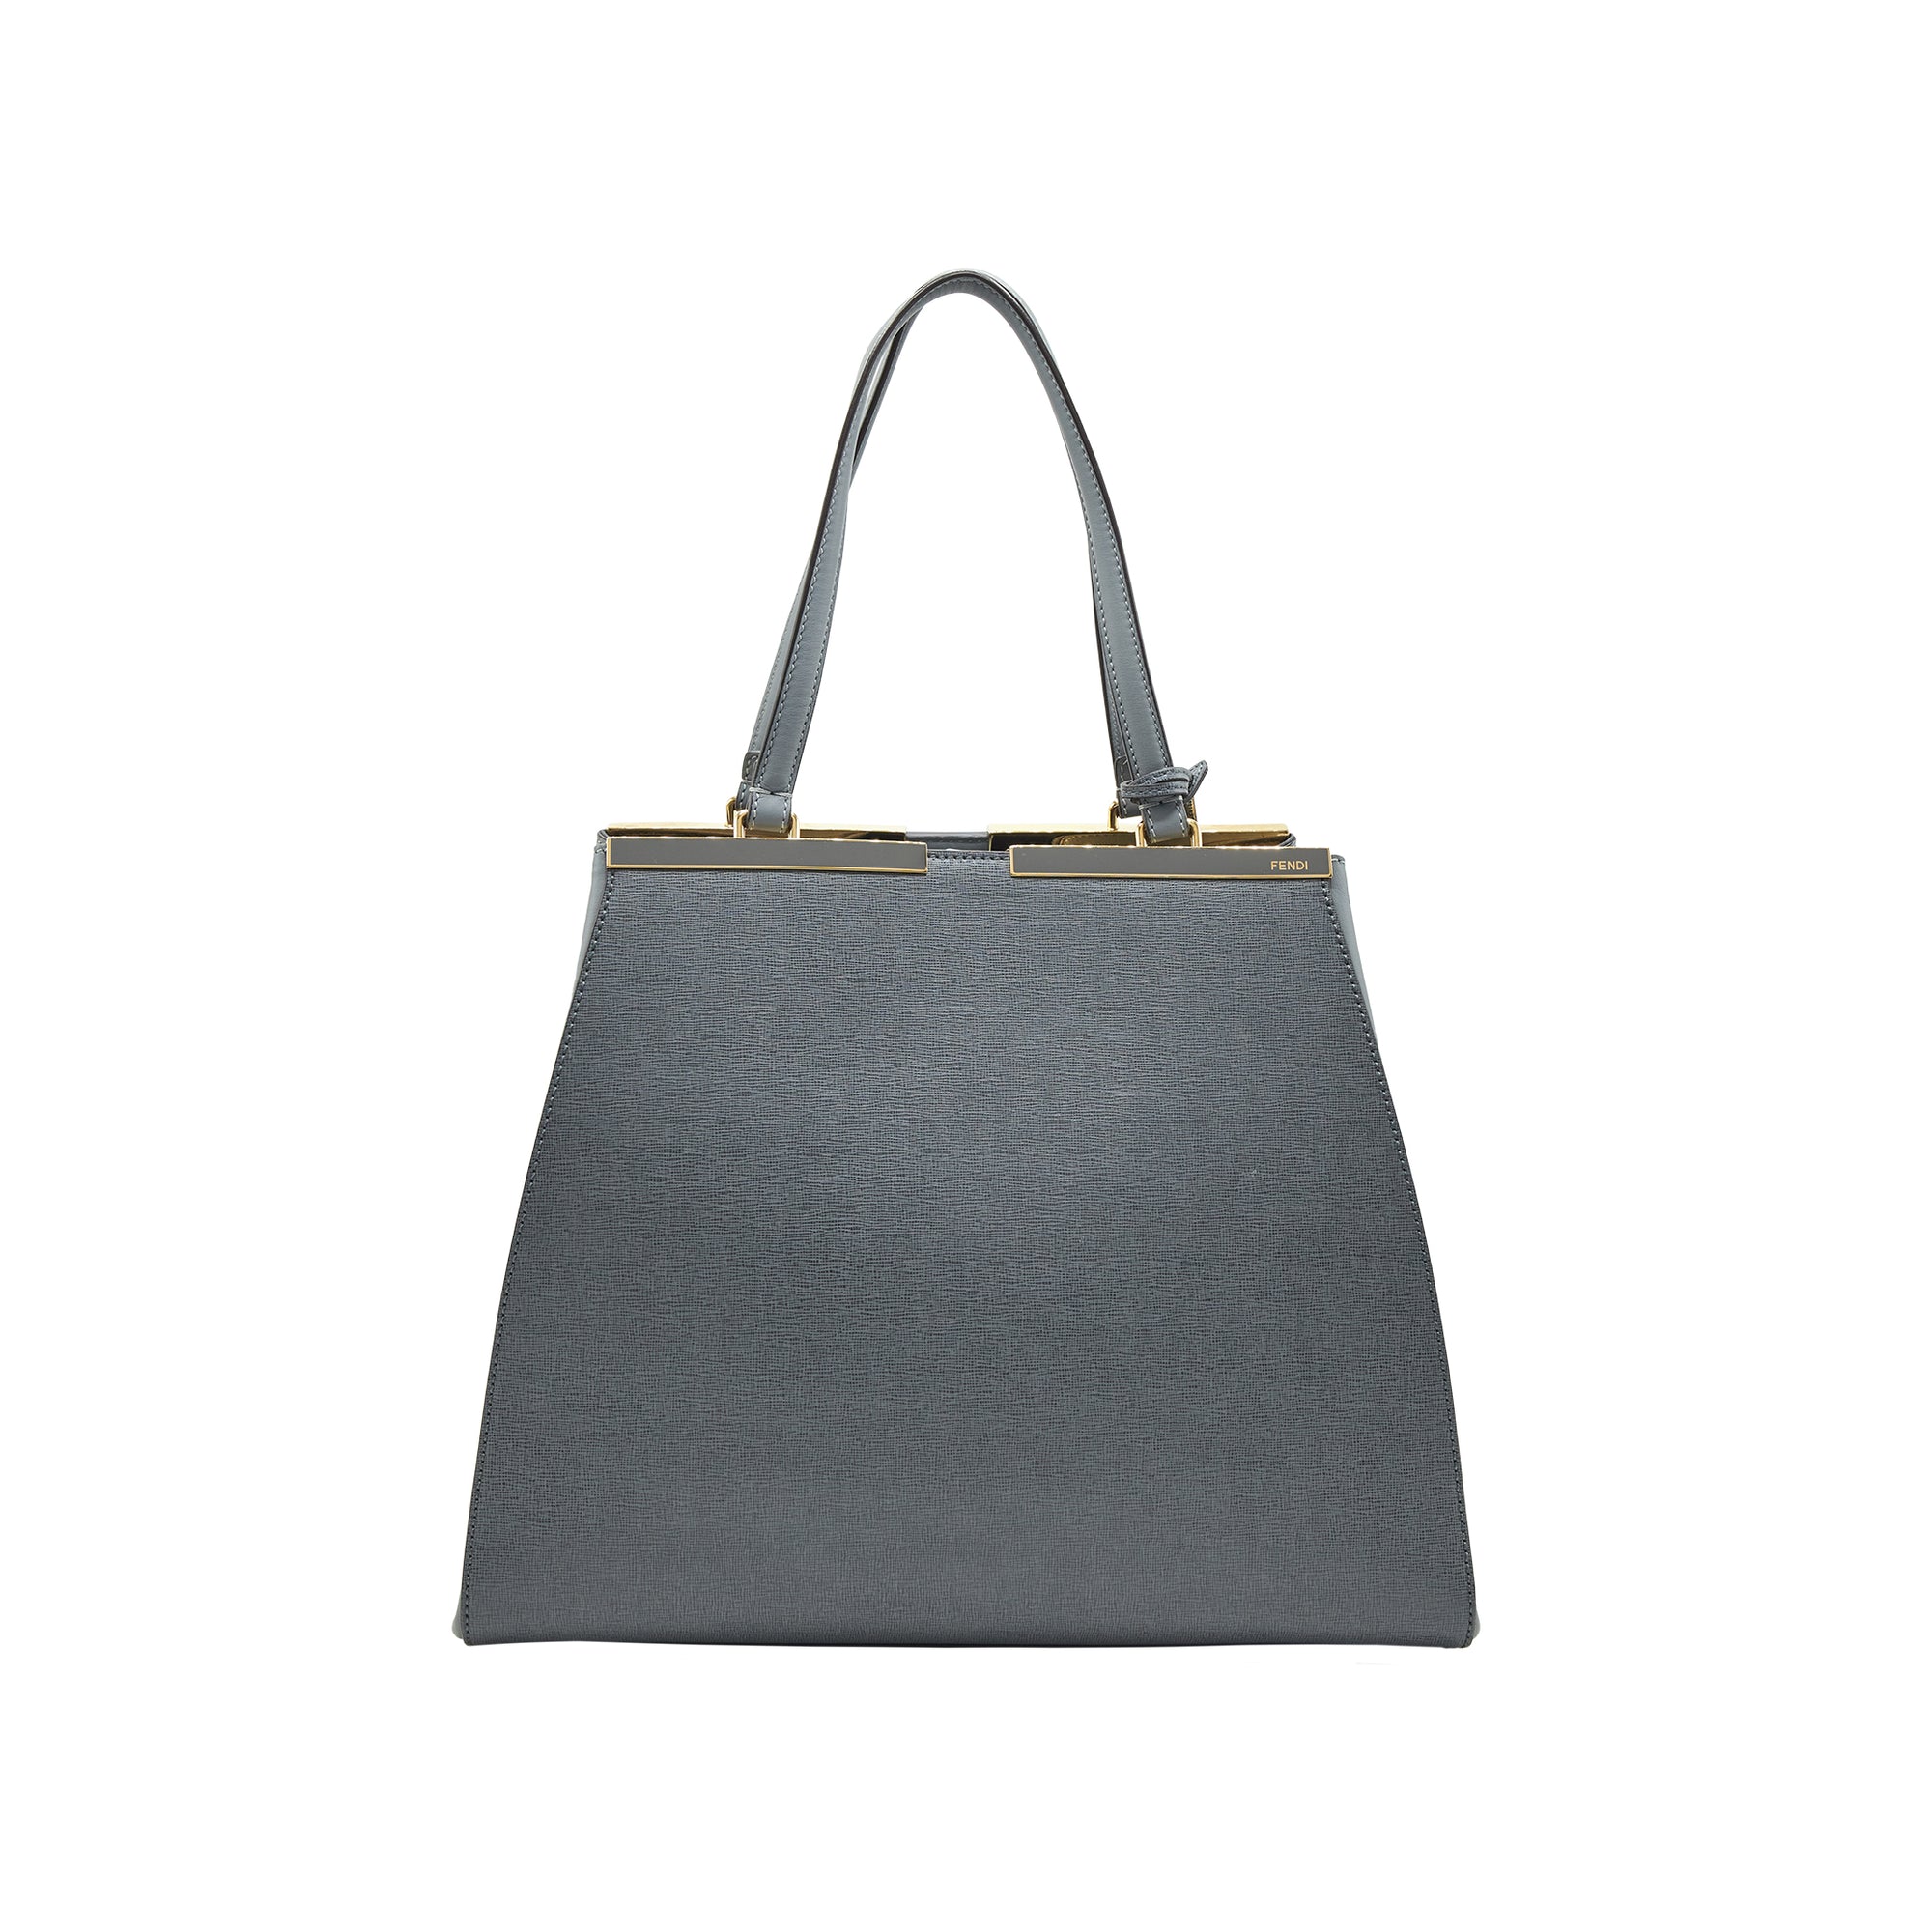 Fendi 3Jours leather handbag